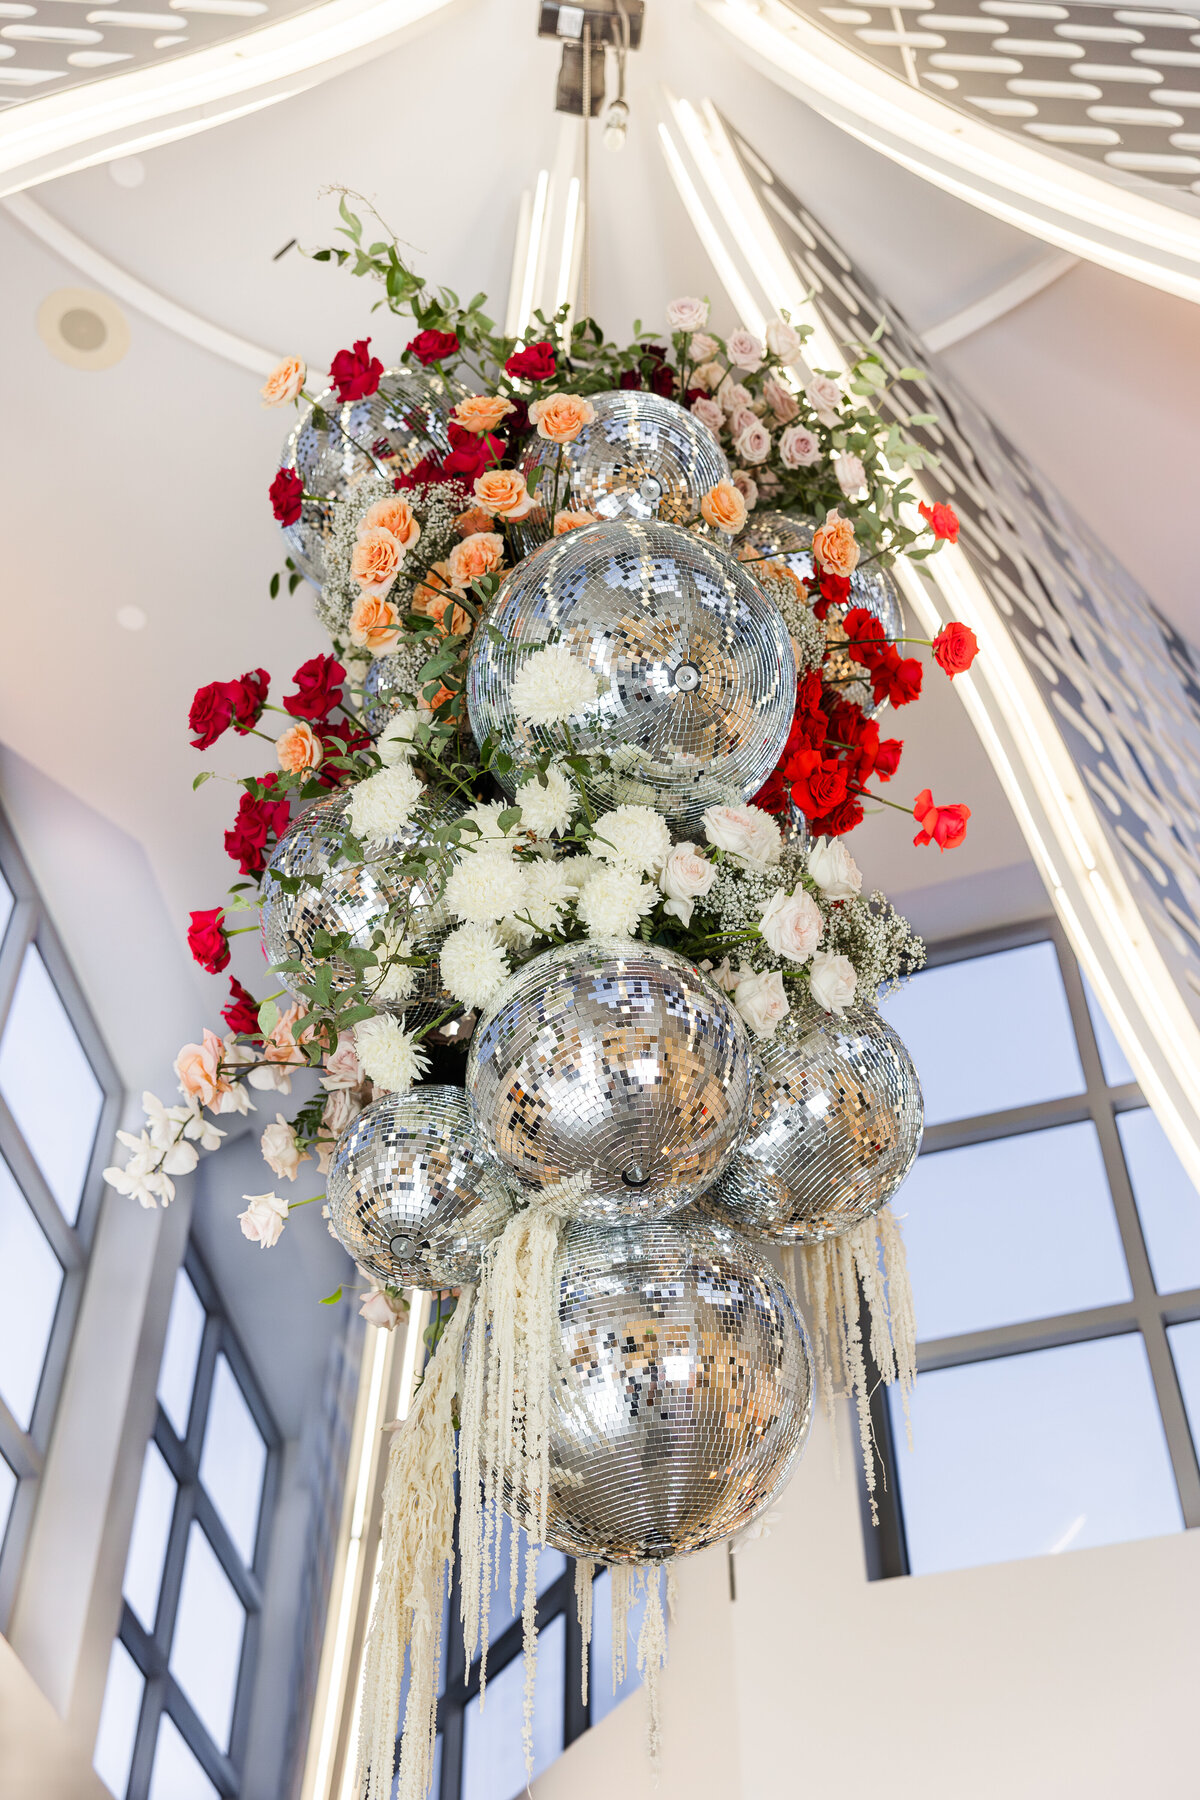 disco-ball-with-flowers-ceiling-wedding-decorationjpg